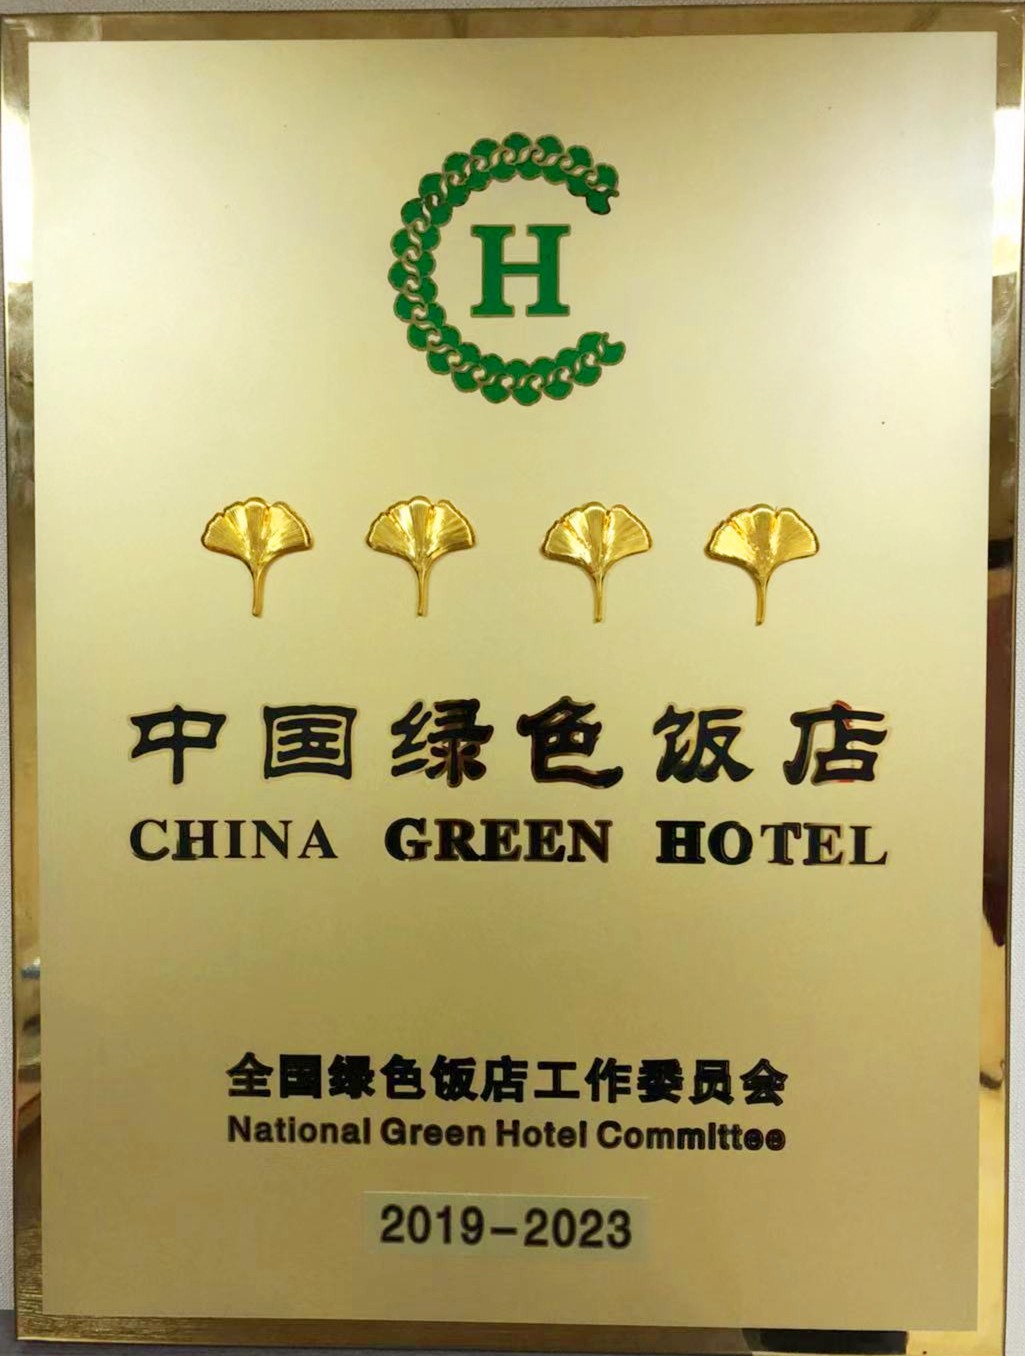 766.ent禹龙国际酒店荣获“2019-2023年度中国绿色饭店”称号